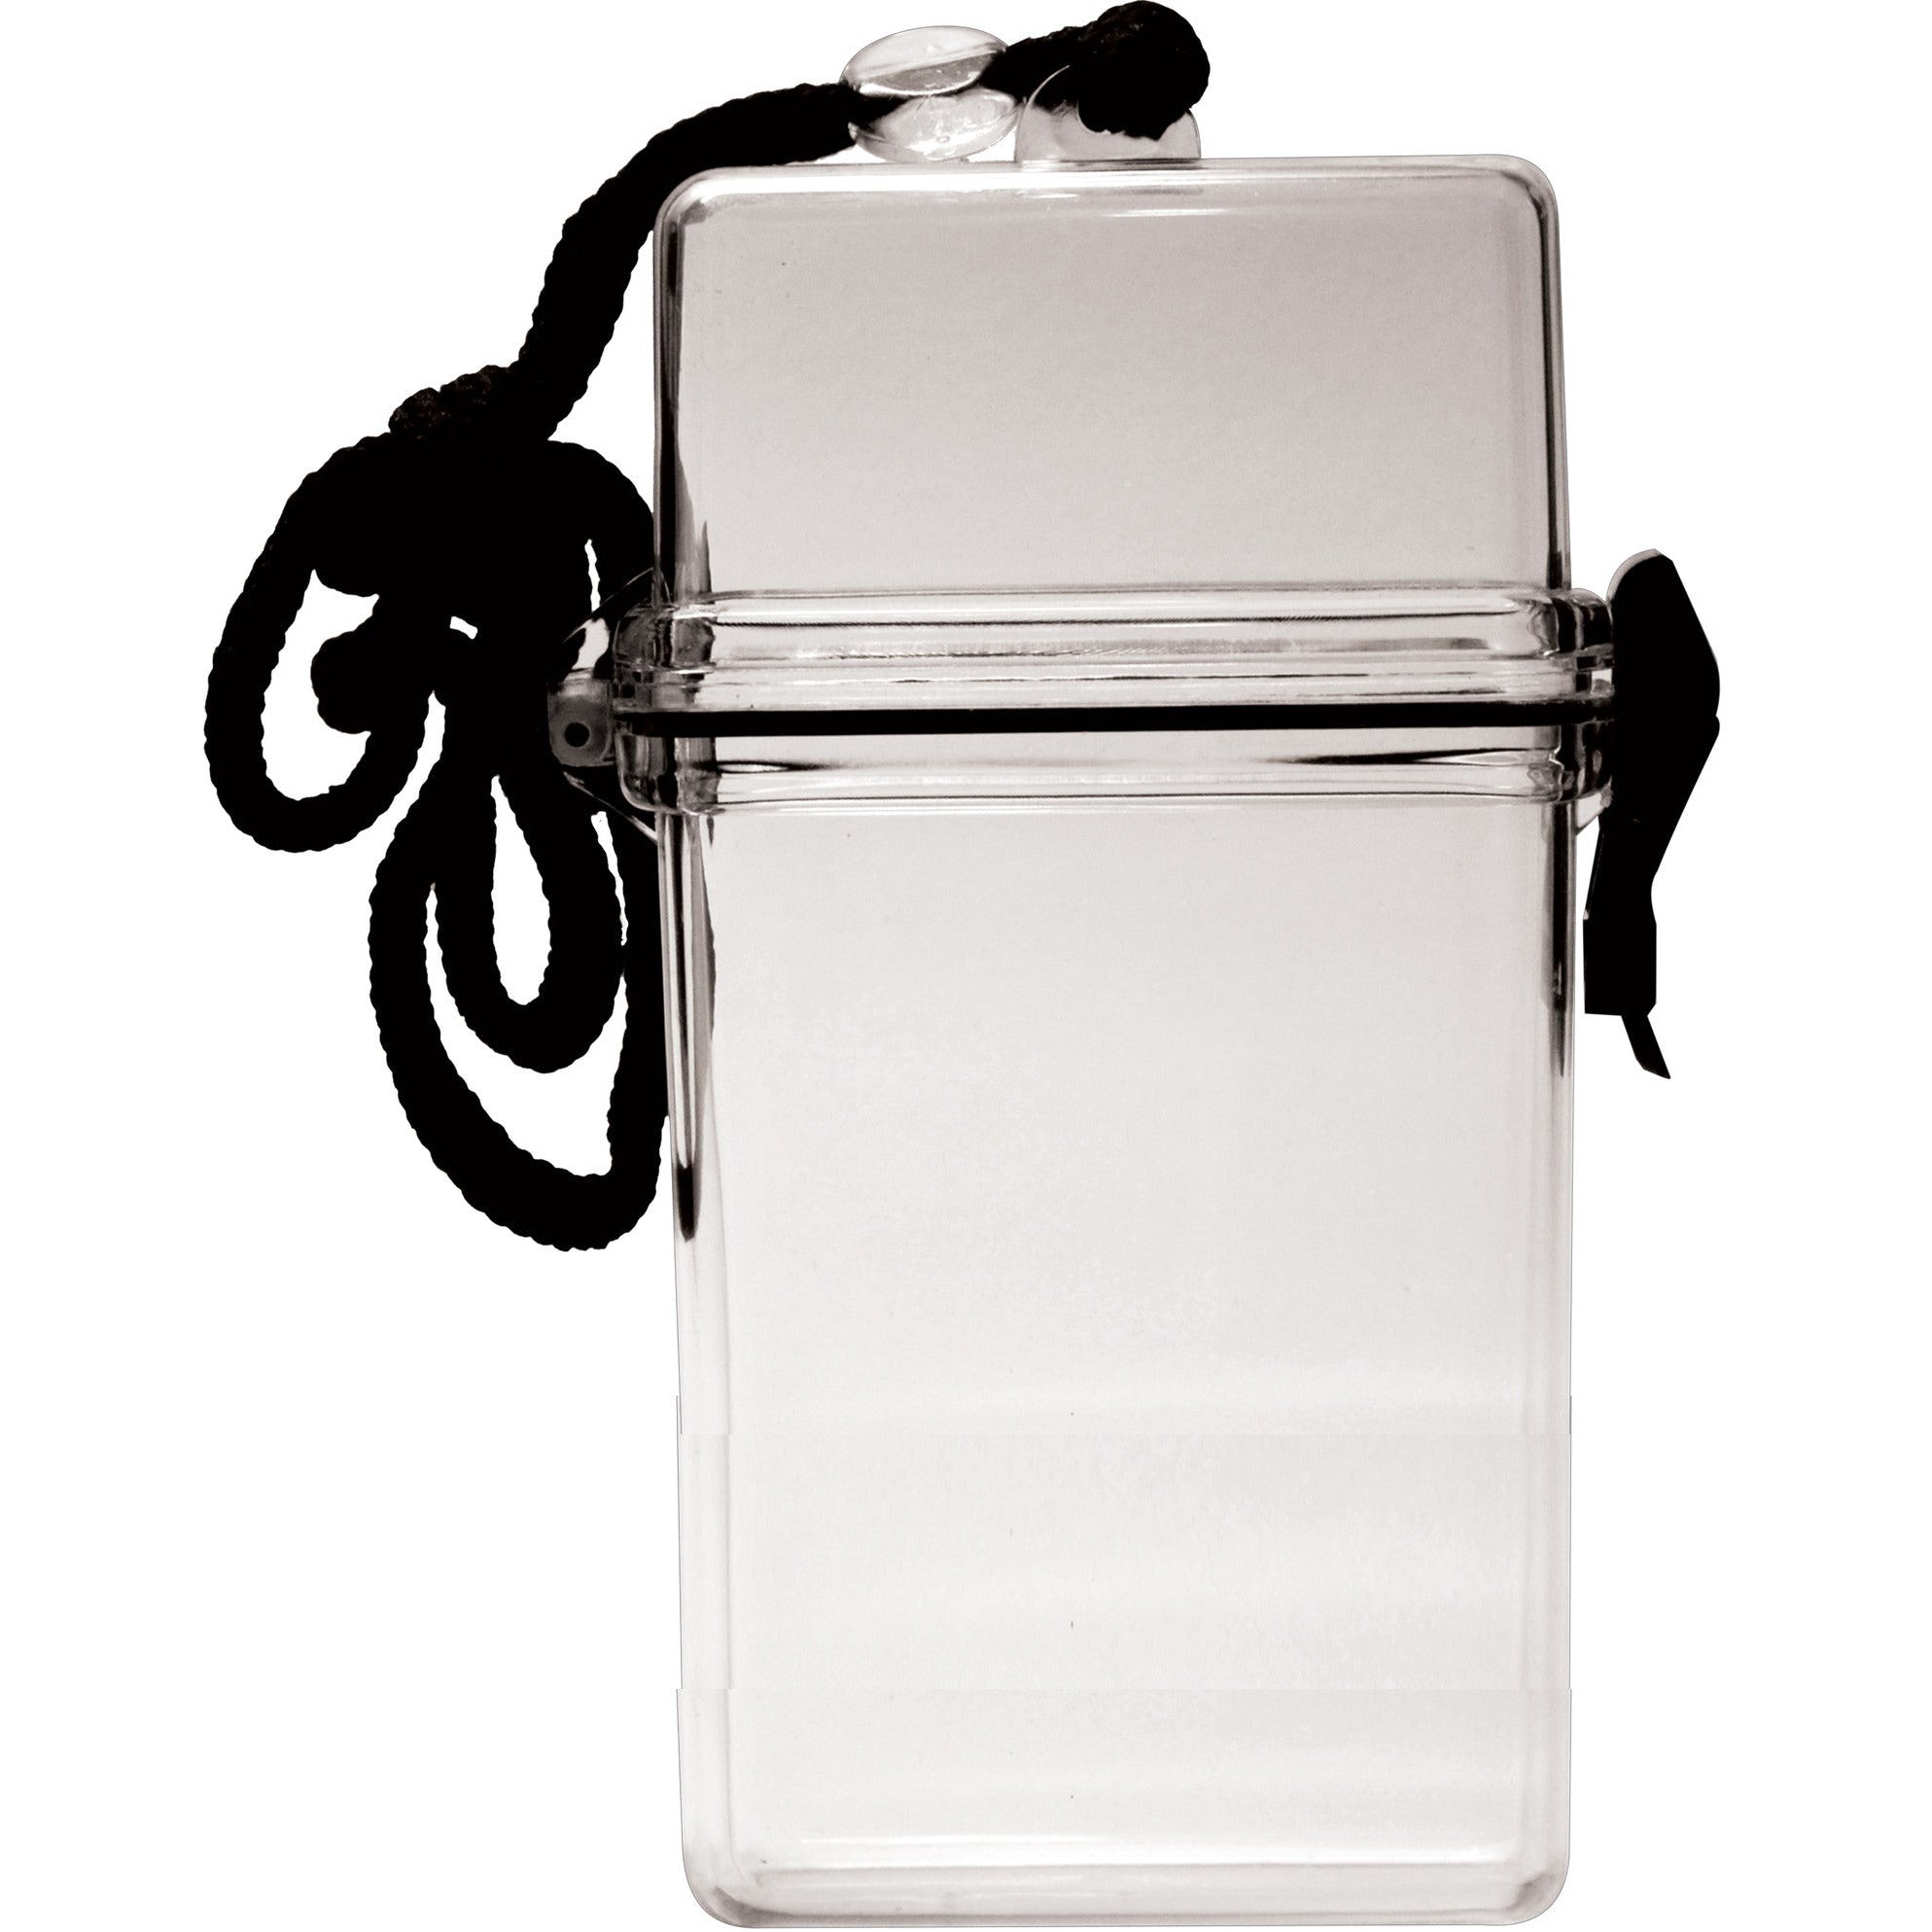 Transparent beach box (fits iPhone 6 size: 10.4x5.8cm)